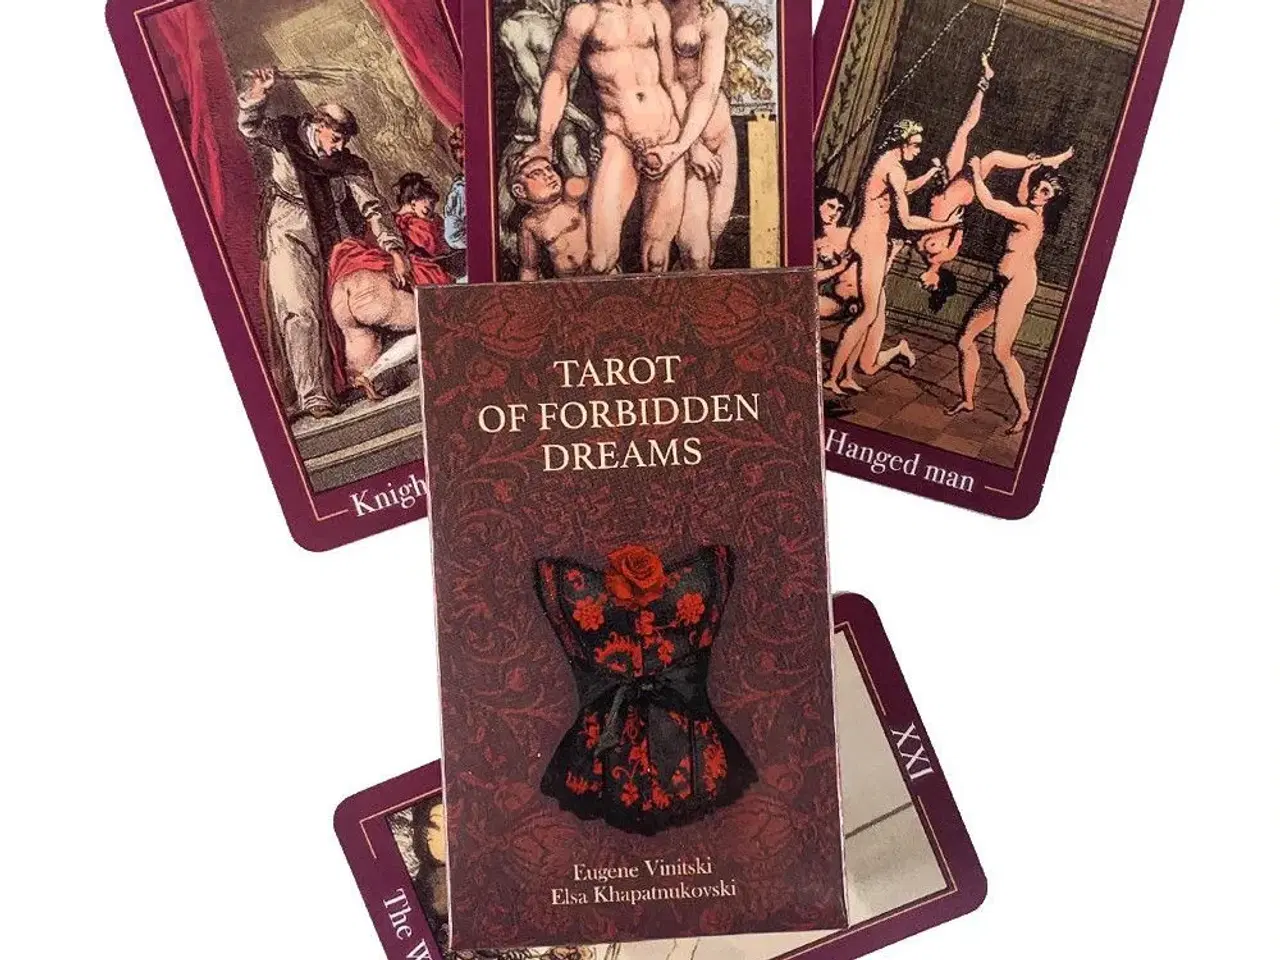 Billede 6 - Tarot kort med erotiske tegninger